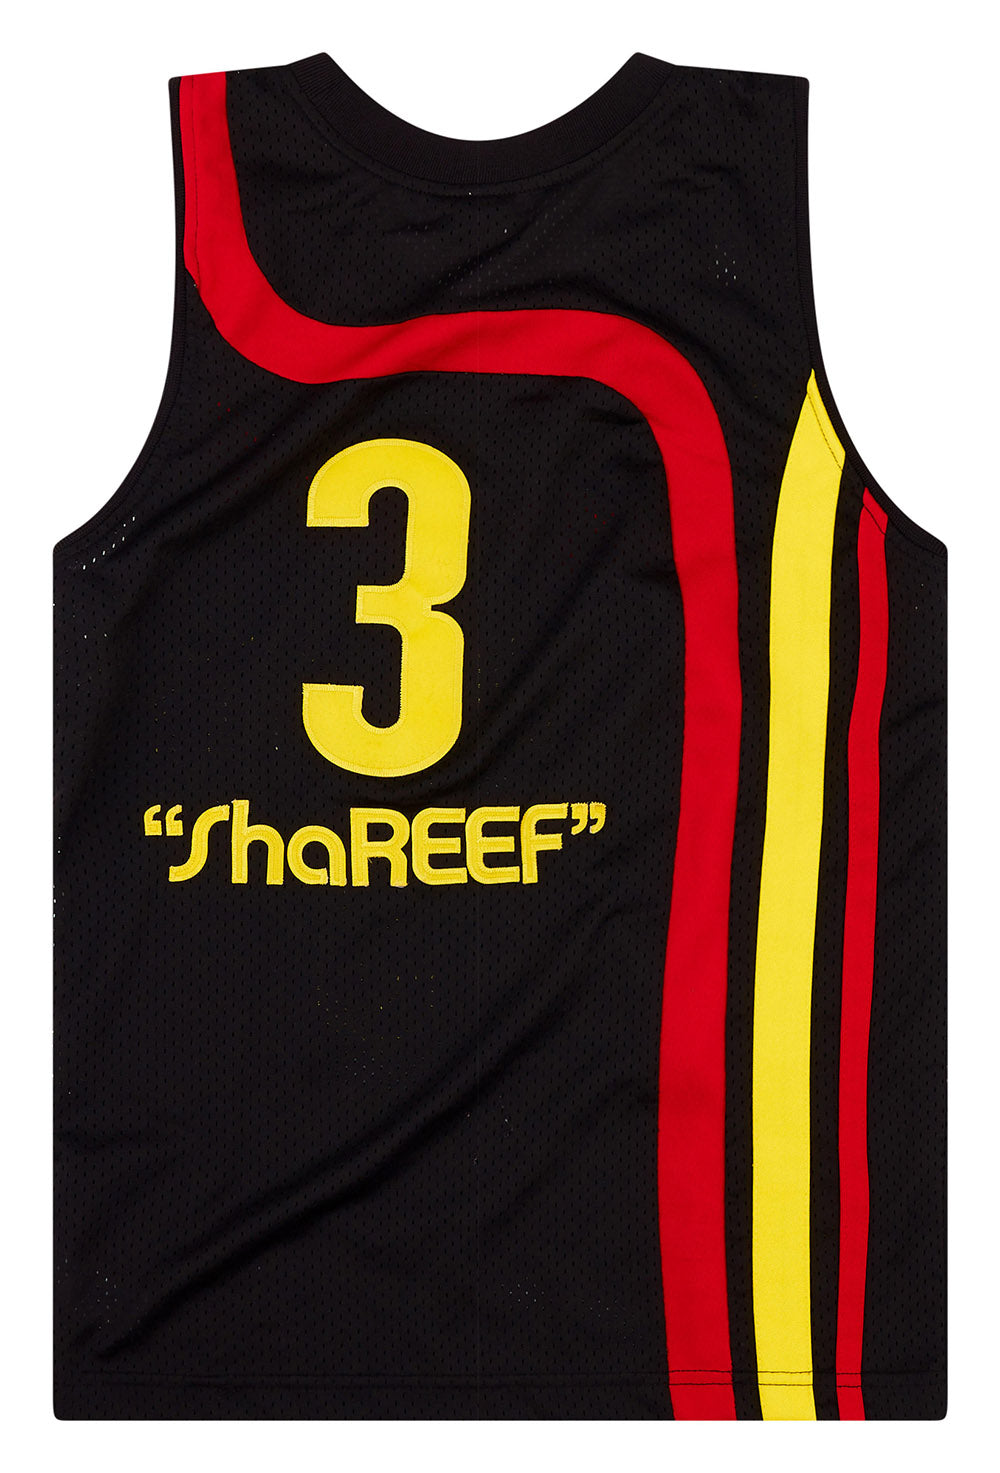 Neon Green Nba Atlanta Hawks Throwback Basketball Jersey #44